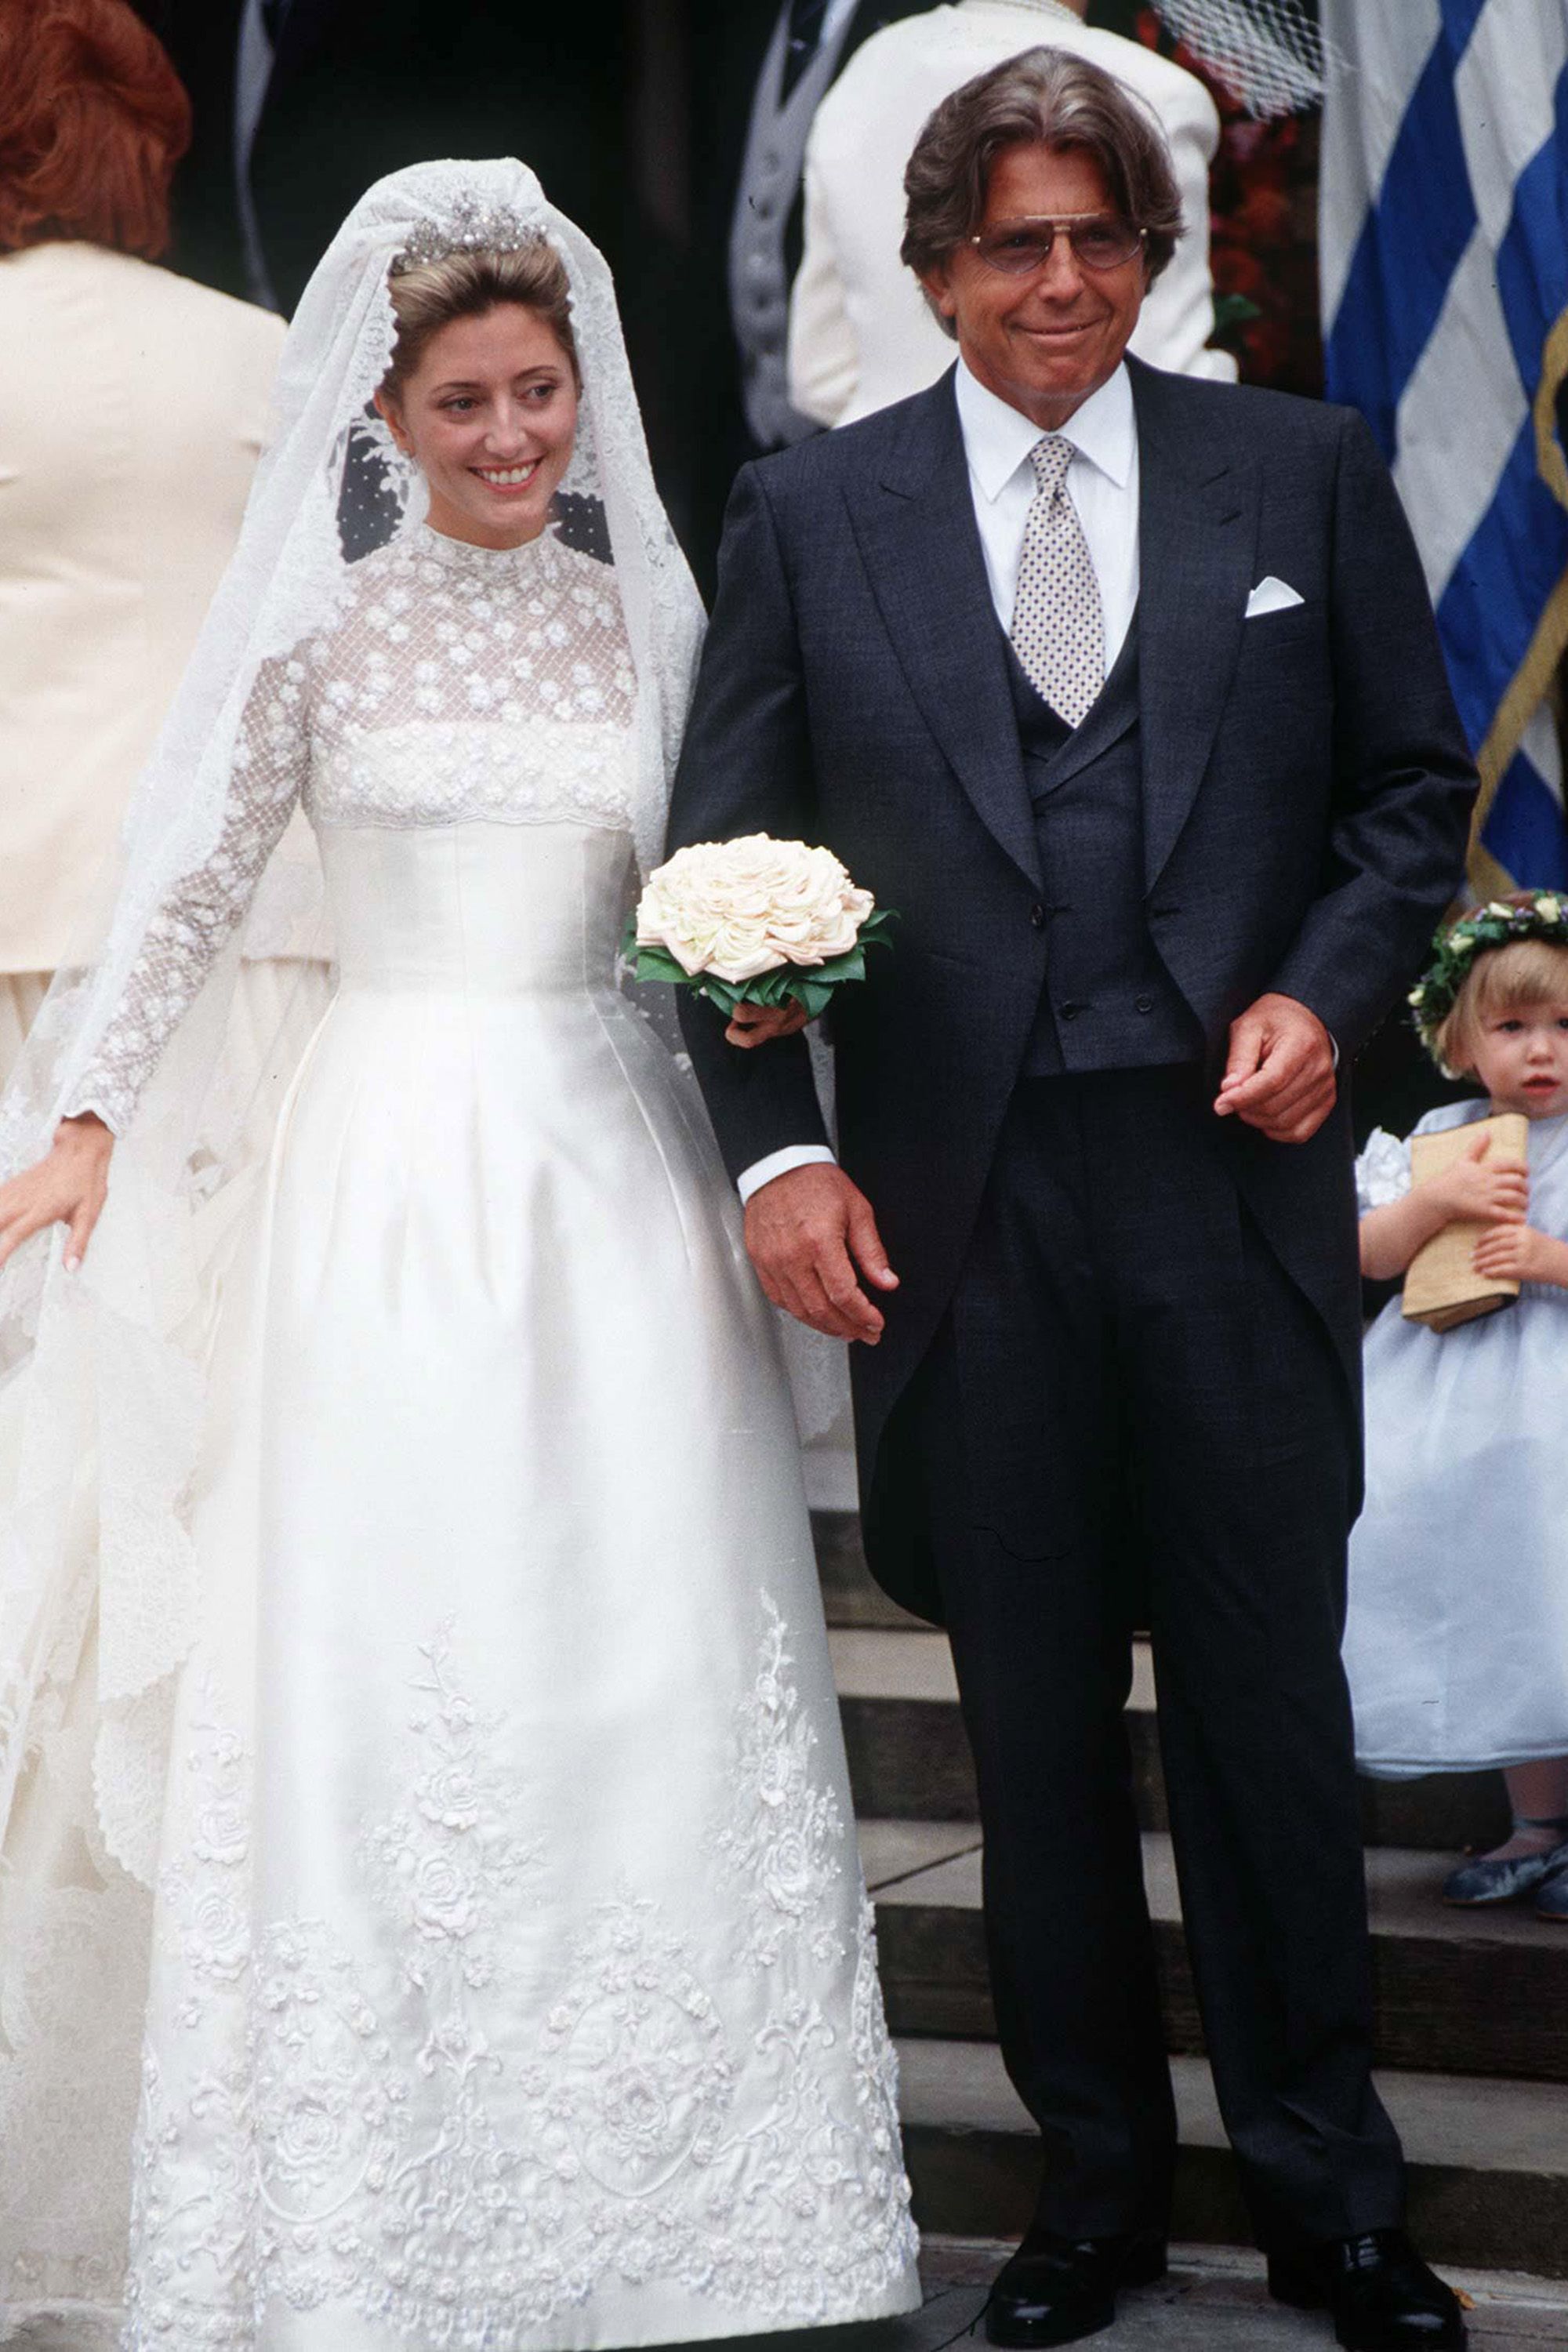 Image for the royal wedding dresses